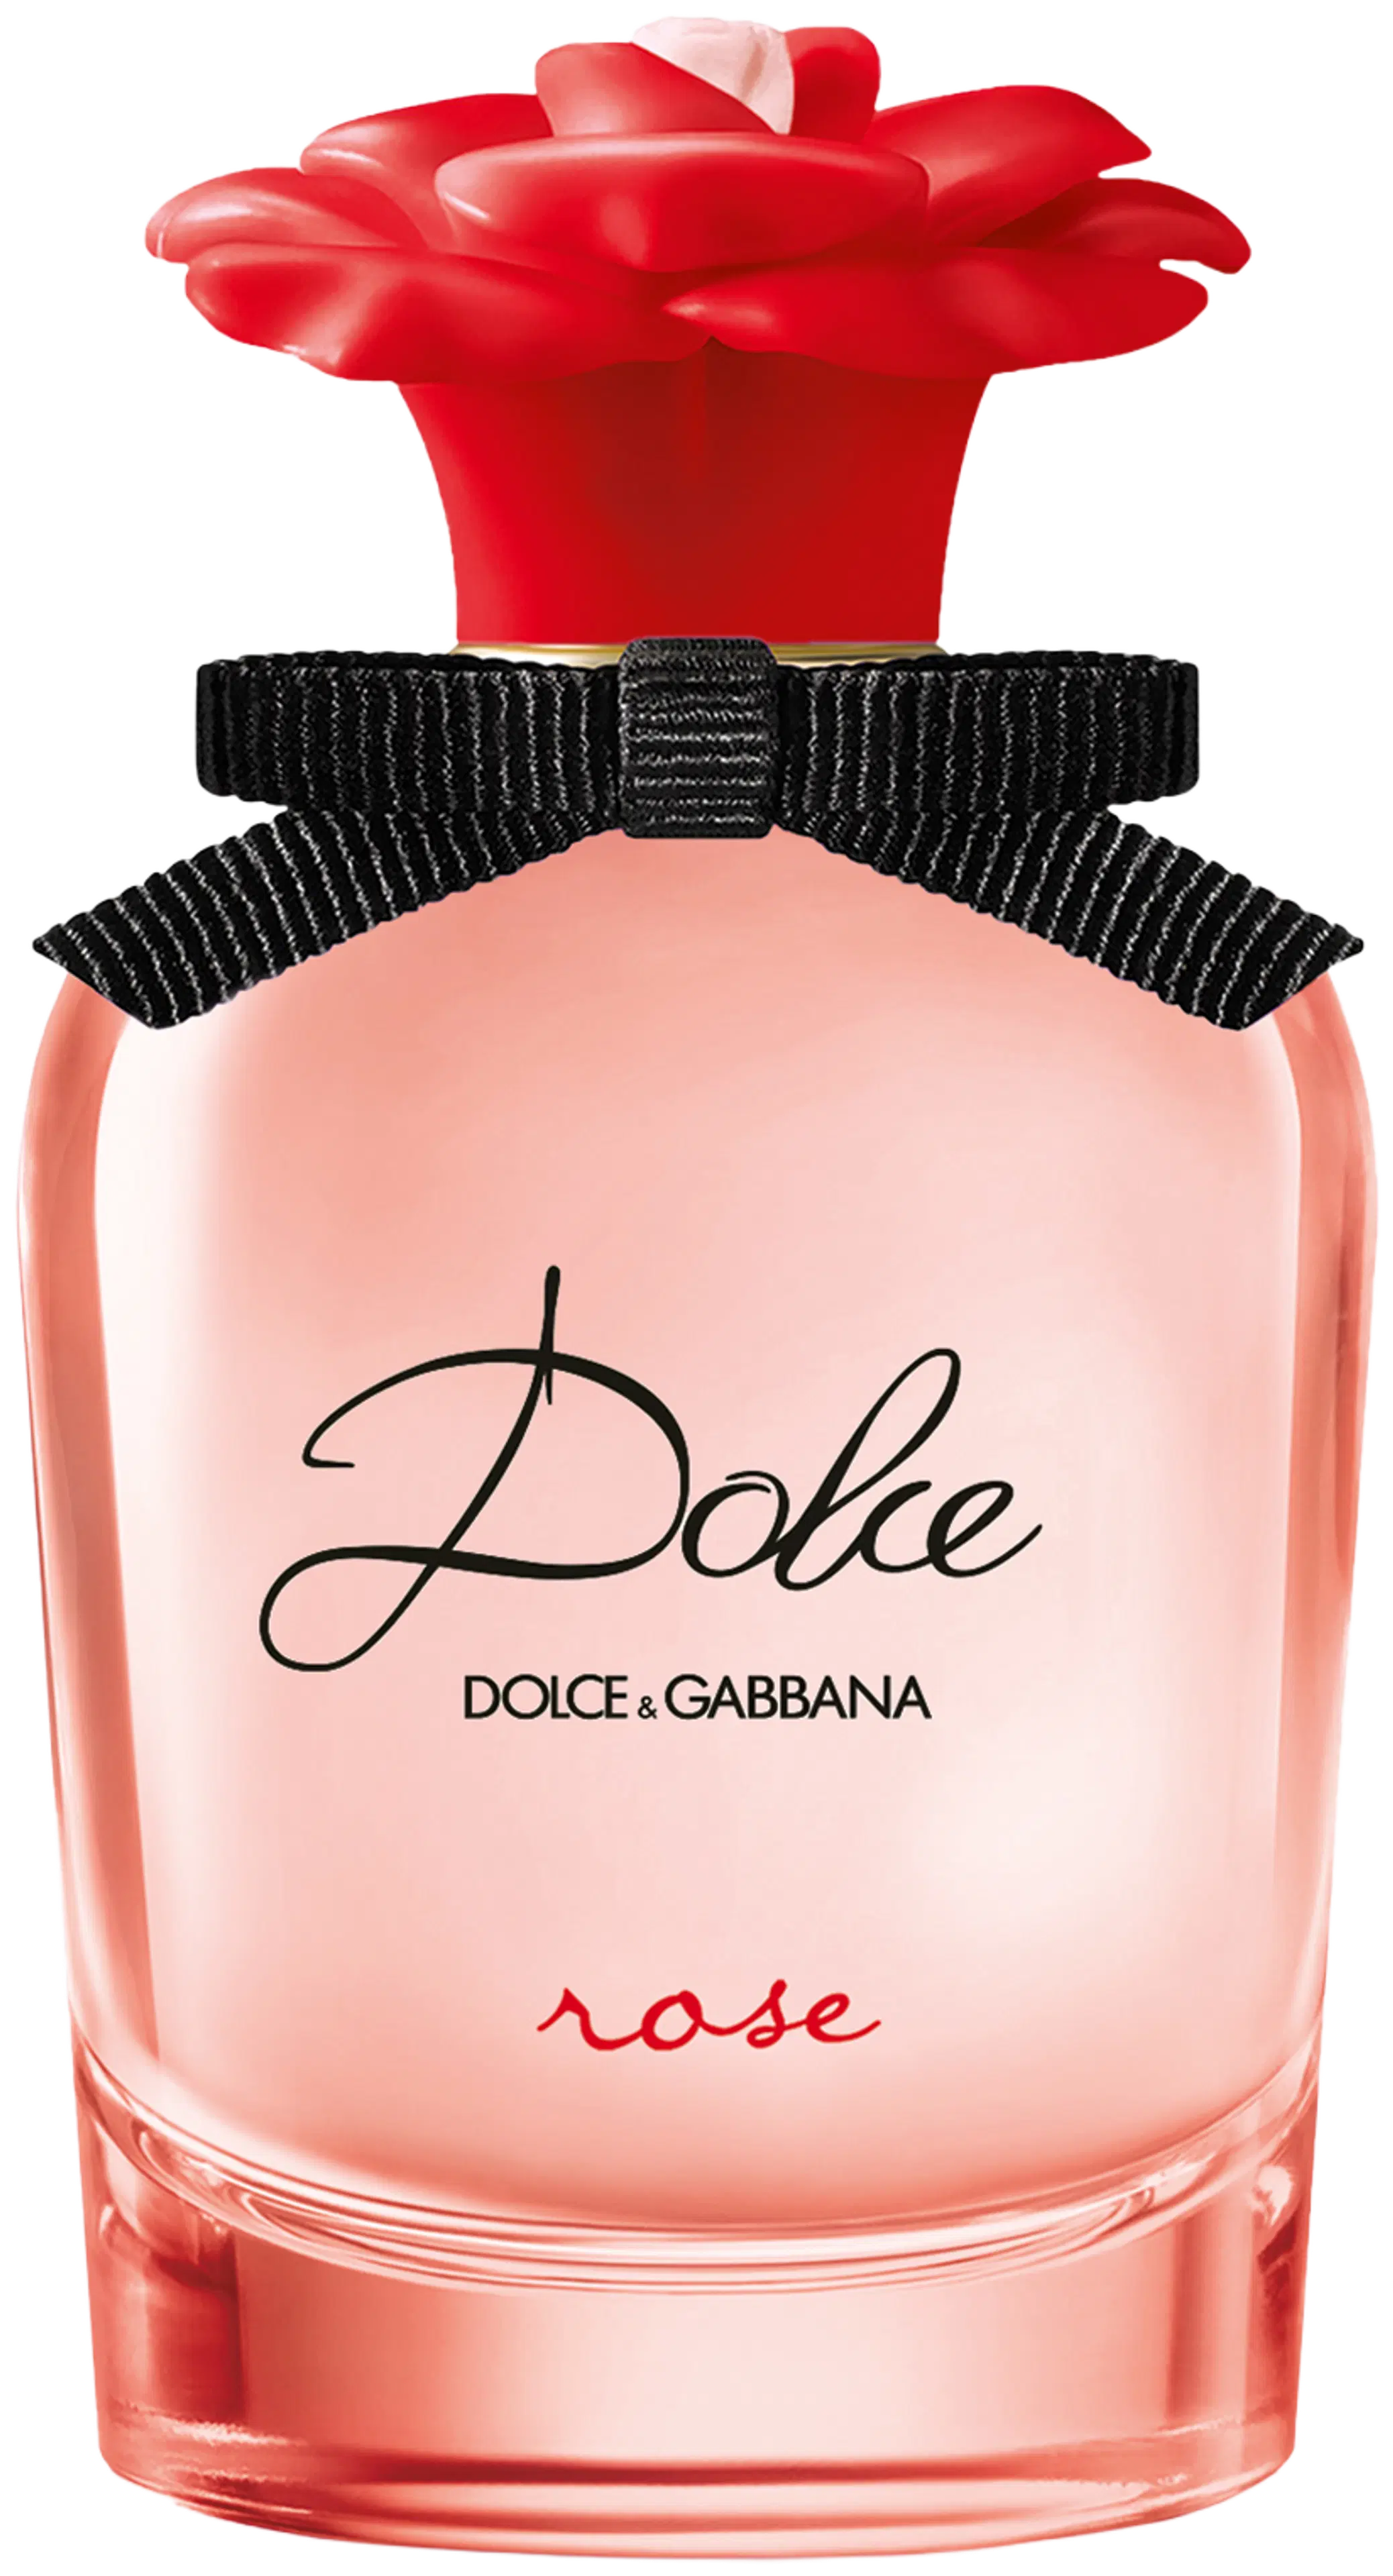 DOLCE & GABBANA Dolce Rose Edt tuoksu 50 ml